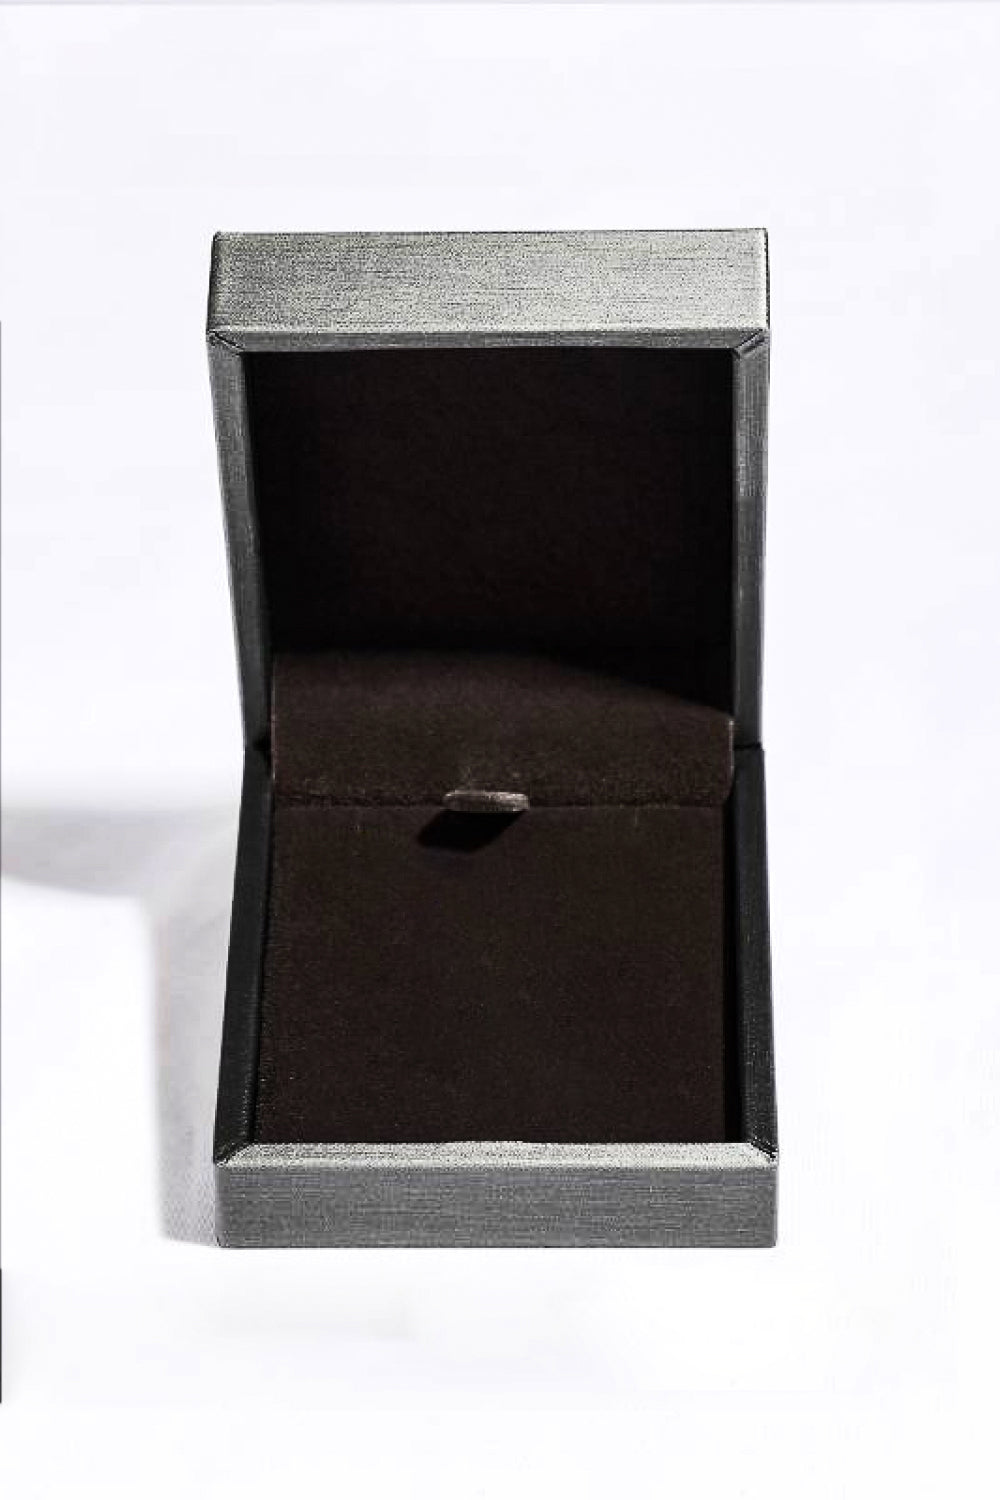 1 Carat Moissanite Platinum-Plated Key Pendant Necklace-Trendsi-Urban Threadz Boutique, Women's Fashion Boutique in Saugatuck, MI